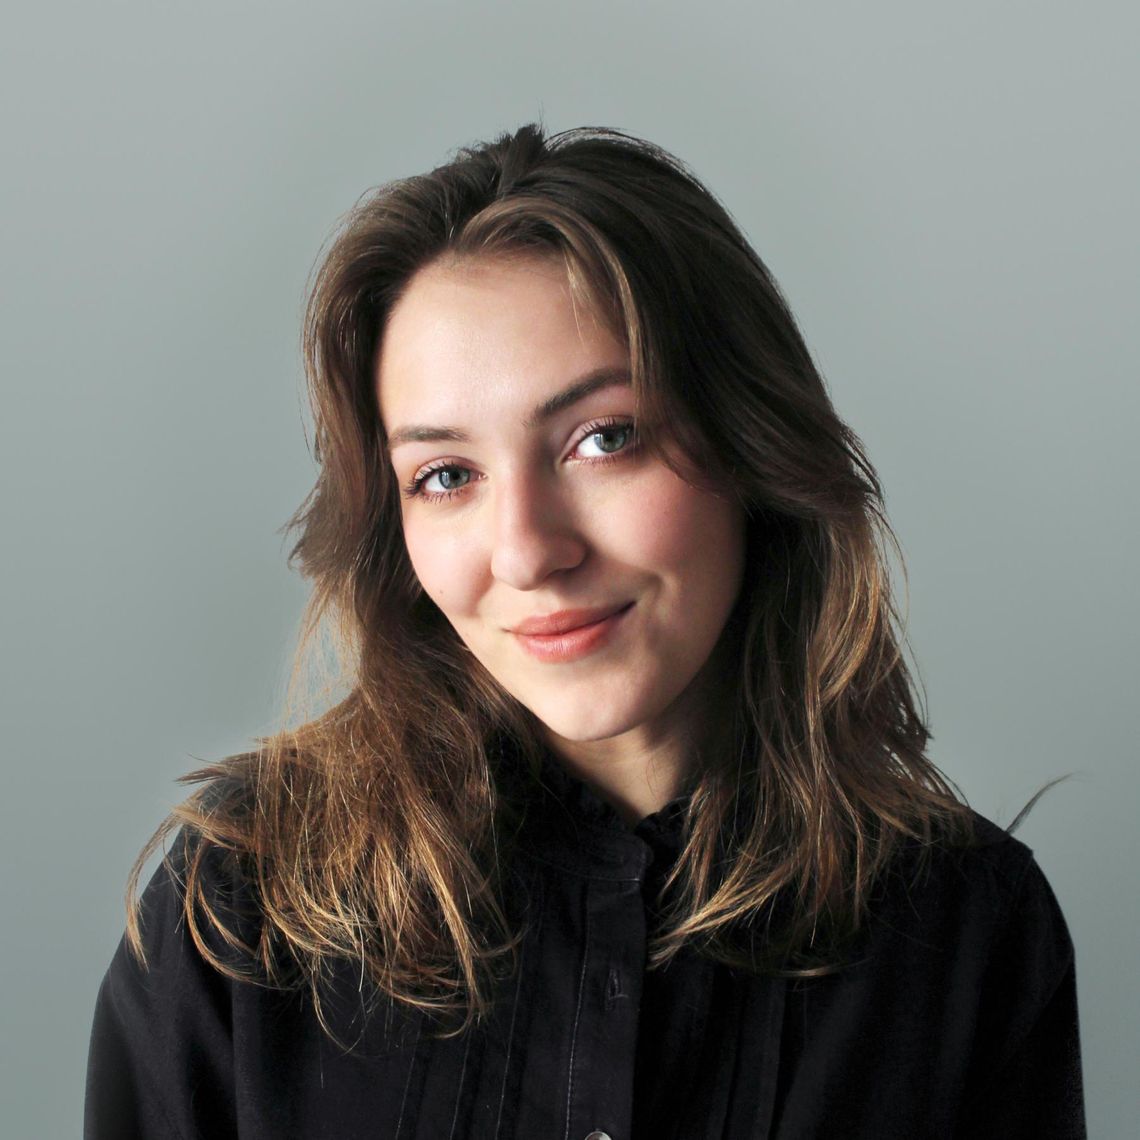 UniPage specialist Ksenia Van Ness